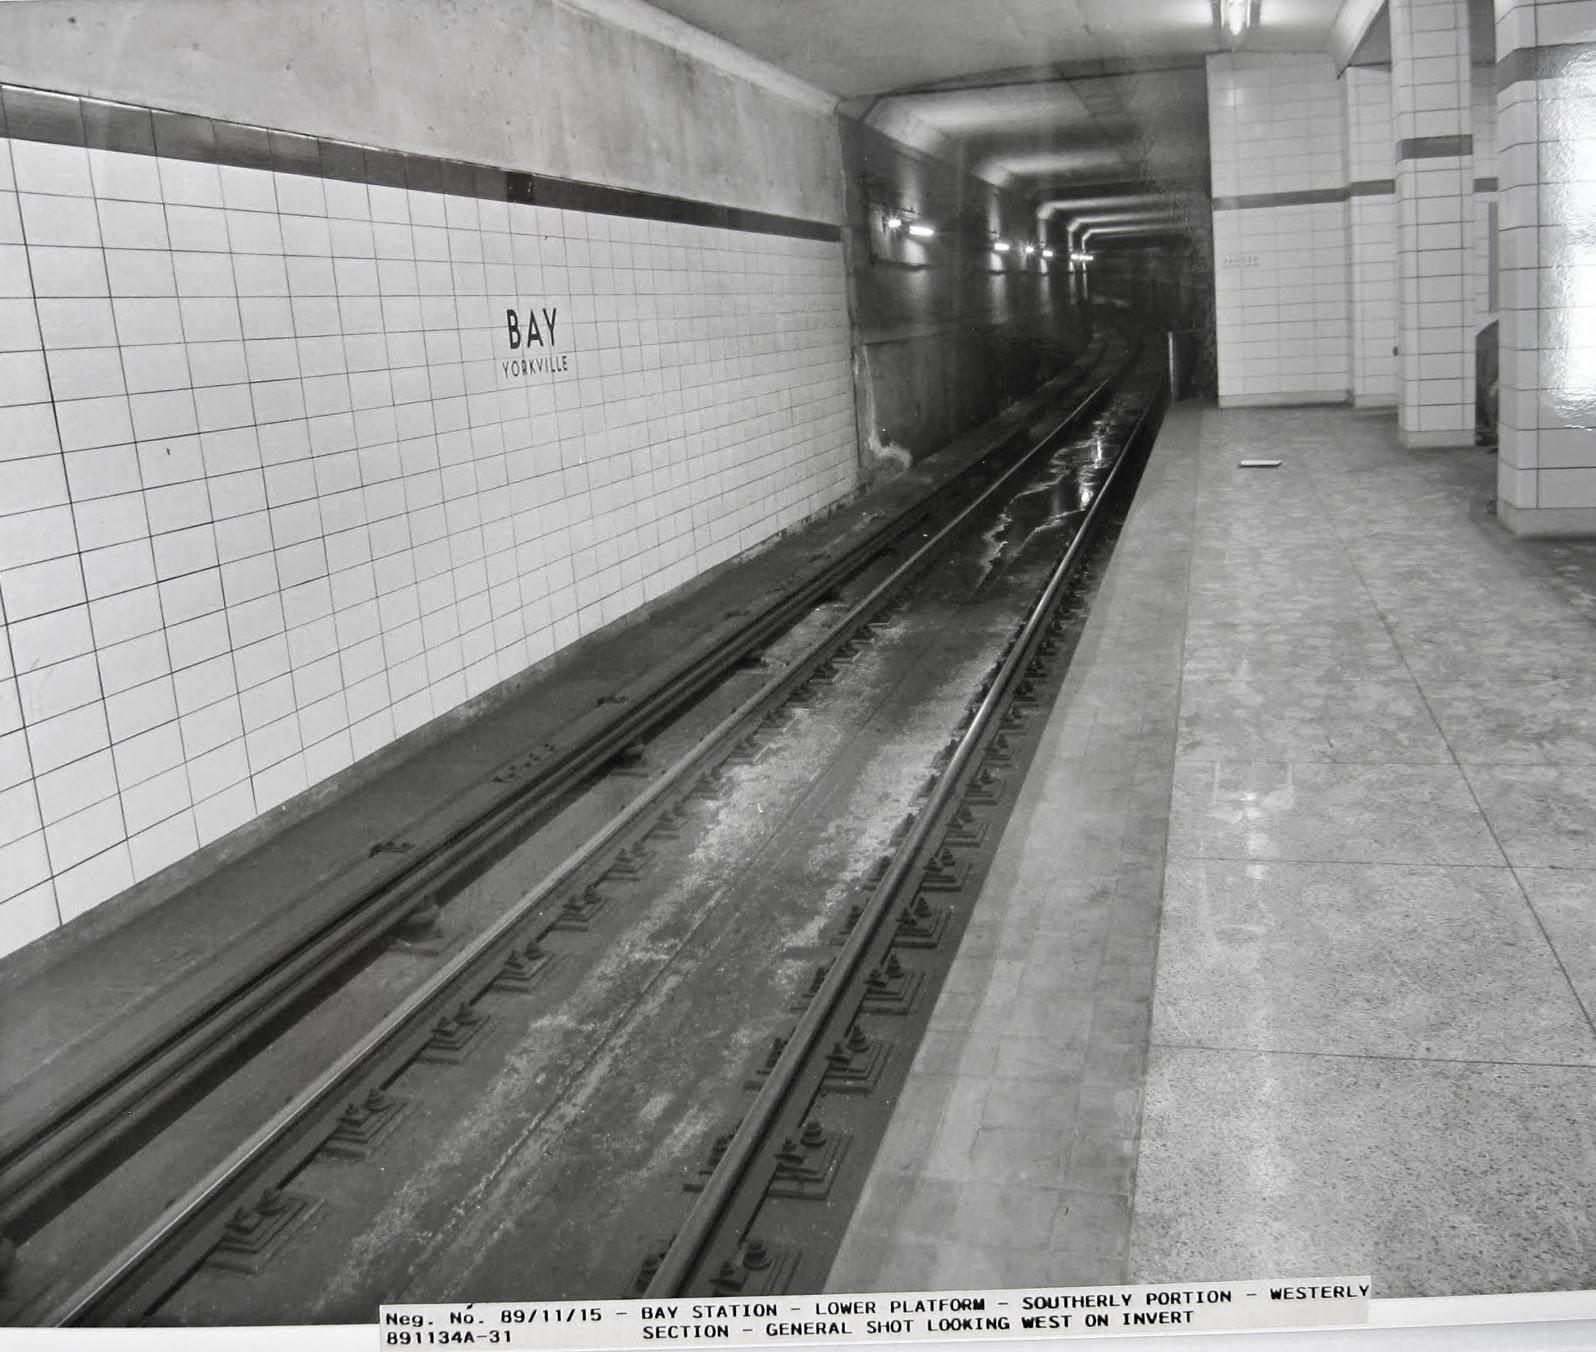 Bloor-Danforth Subway 16 Bay 19891115 Lower Eastbound Platform